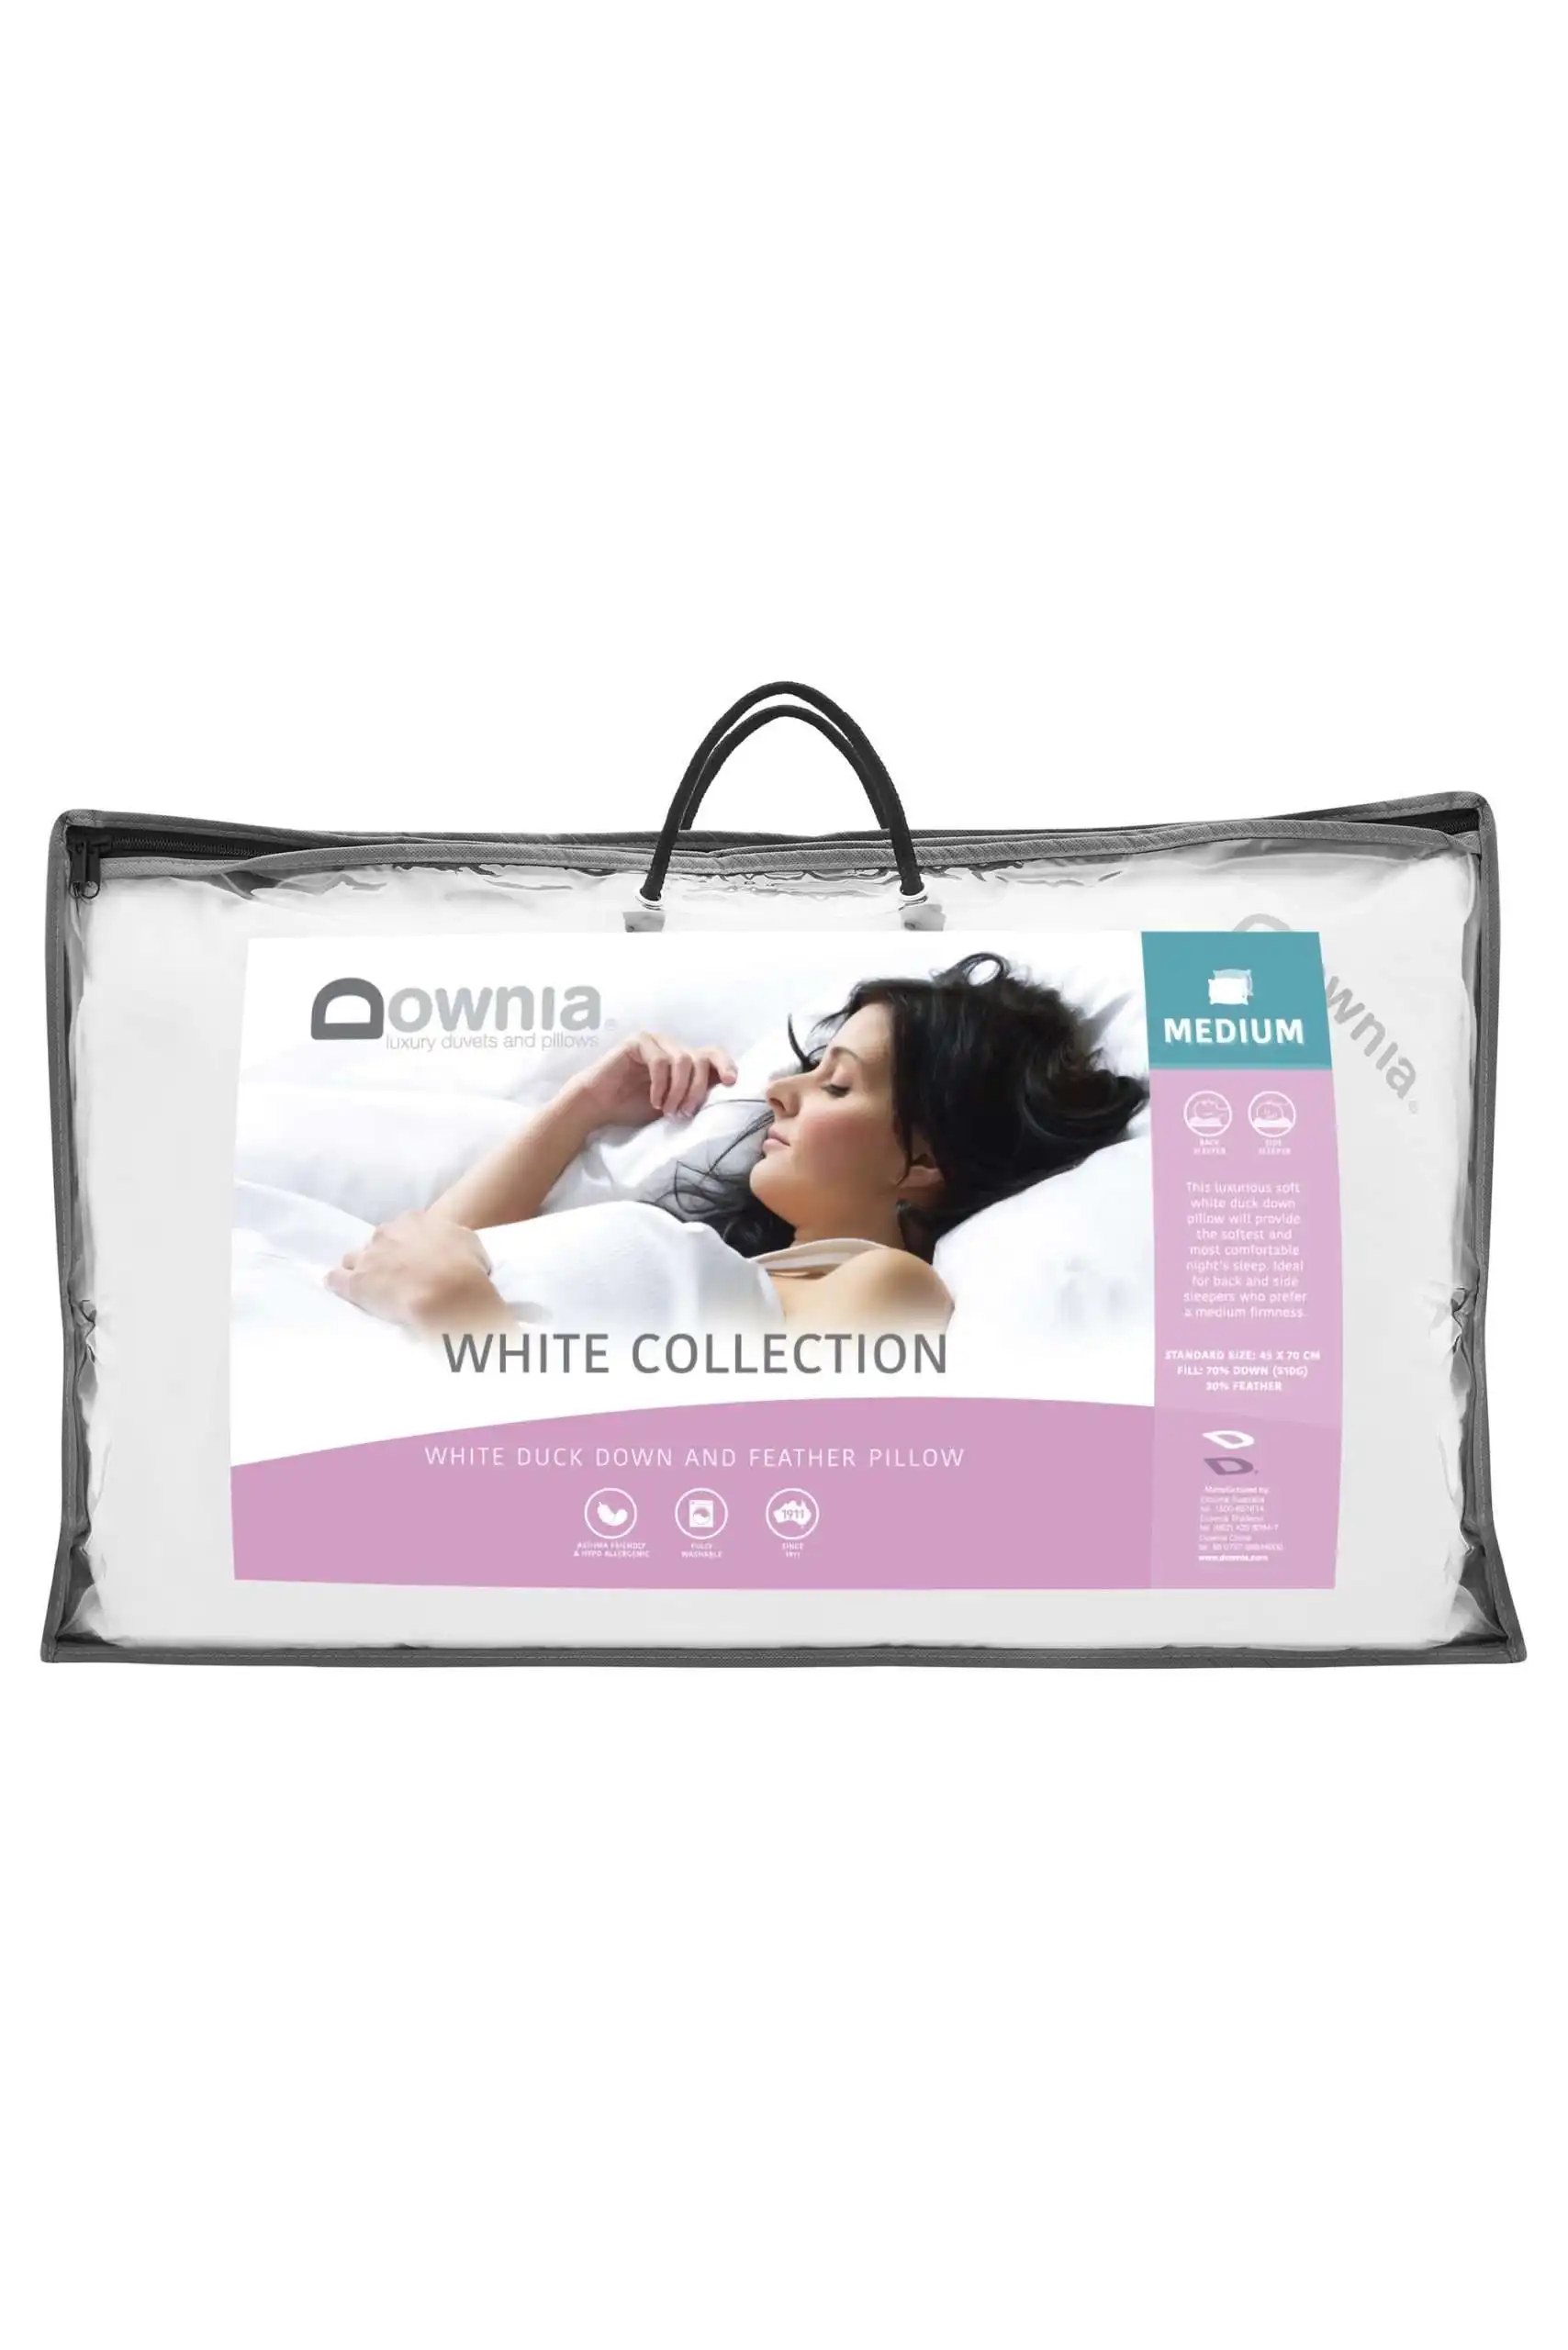 Downia White Collection 85 Goose Pillow